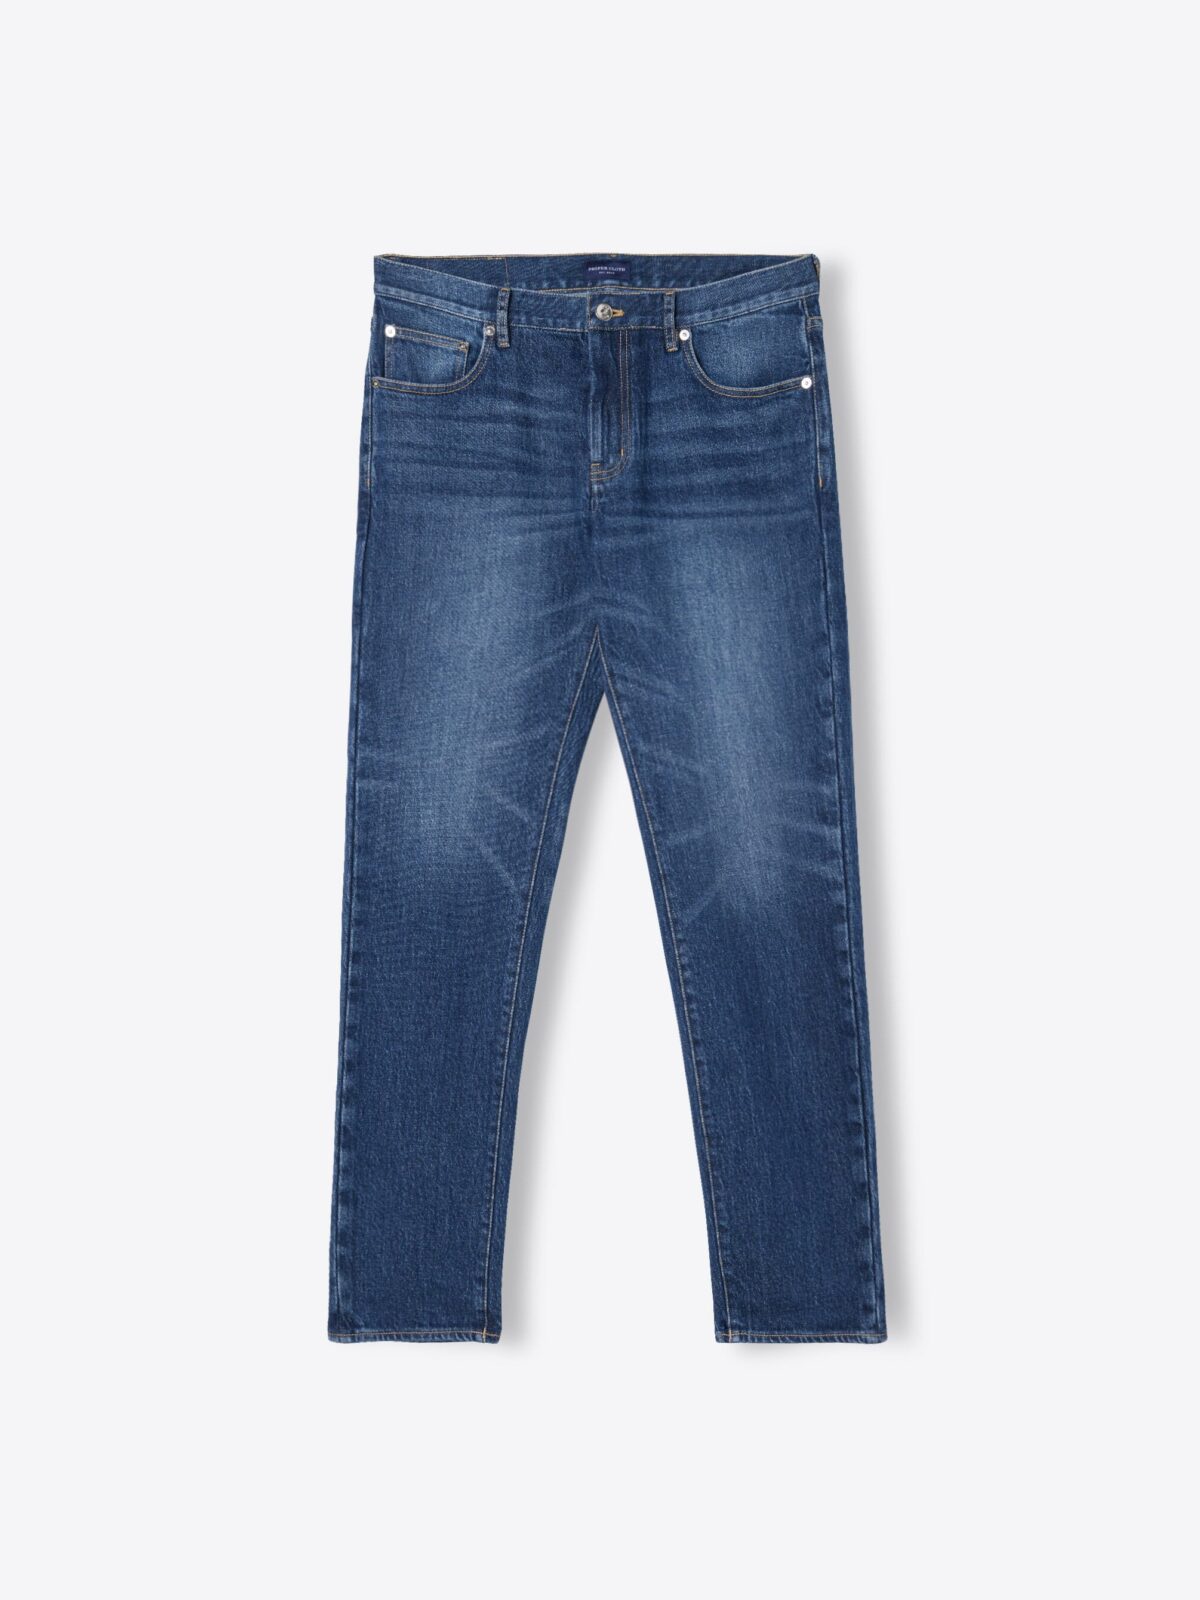 Crosby 11.5oz Dark Wash Indigo Stretch Jeans - Custom Fit Pants